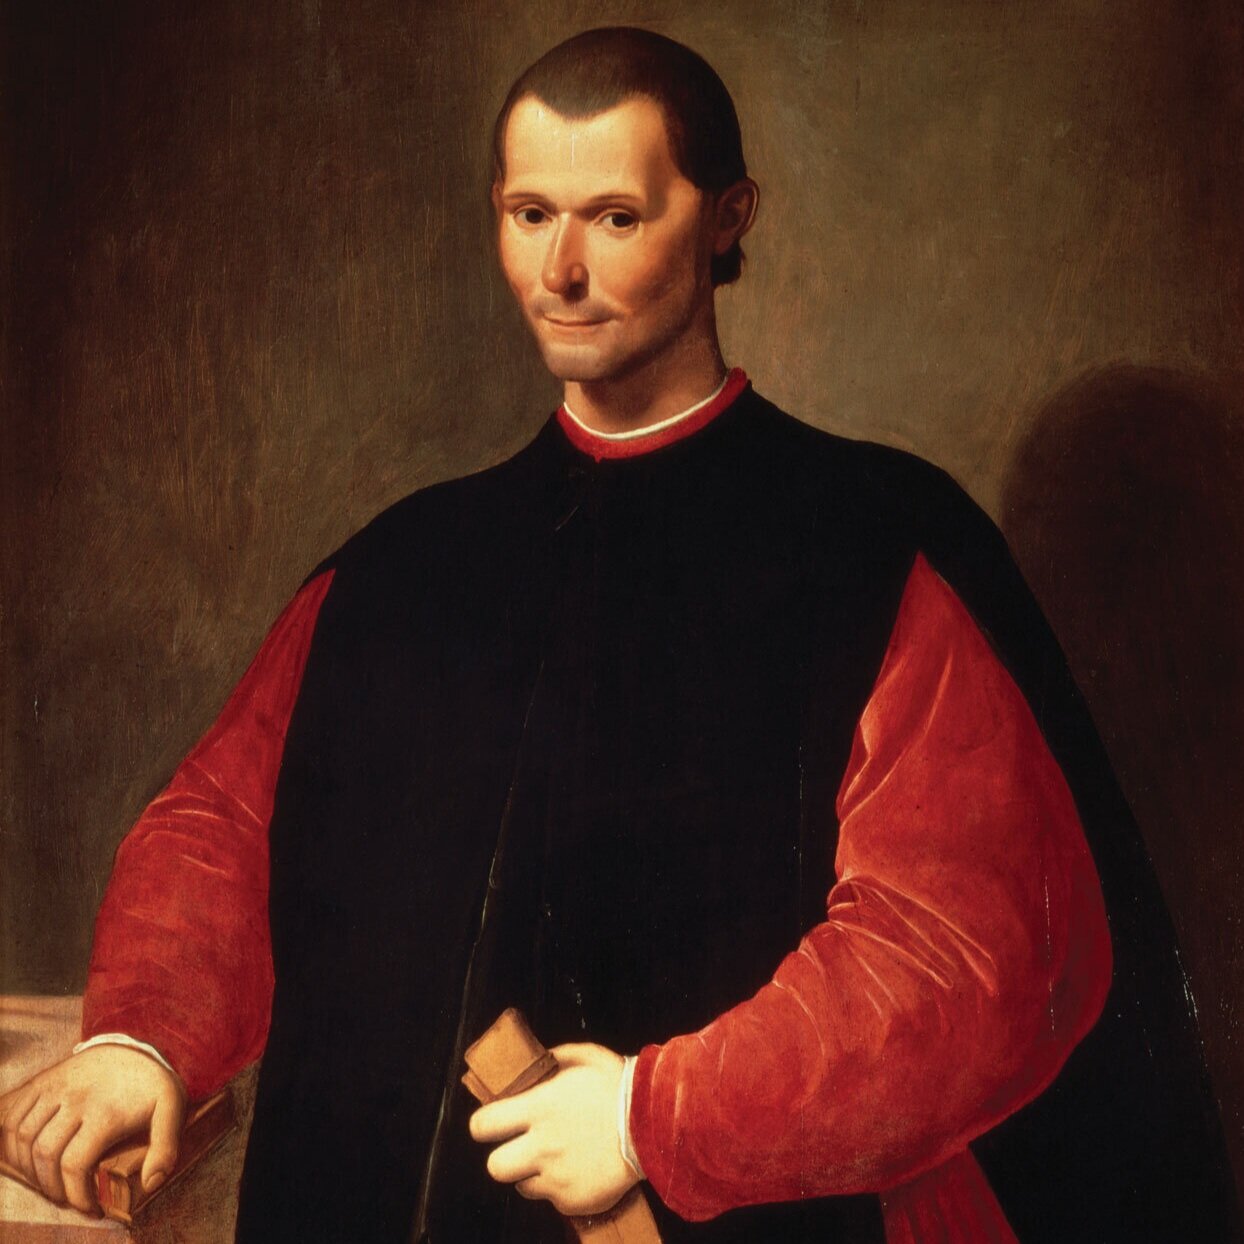 163: Machiavelli's 